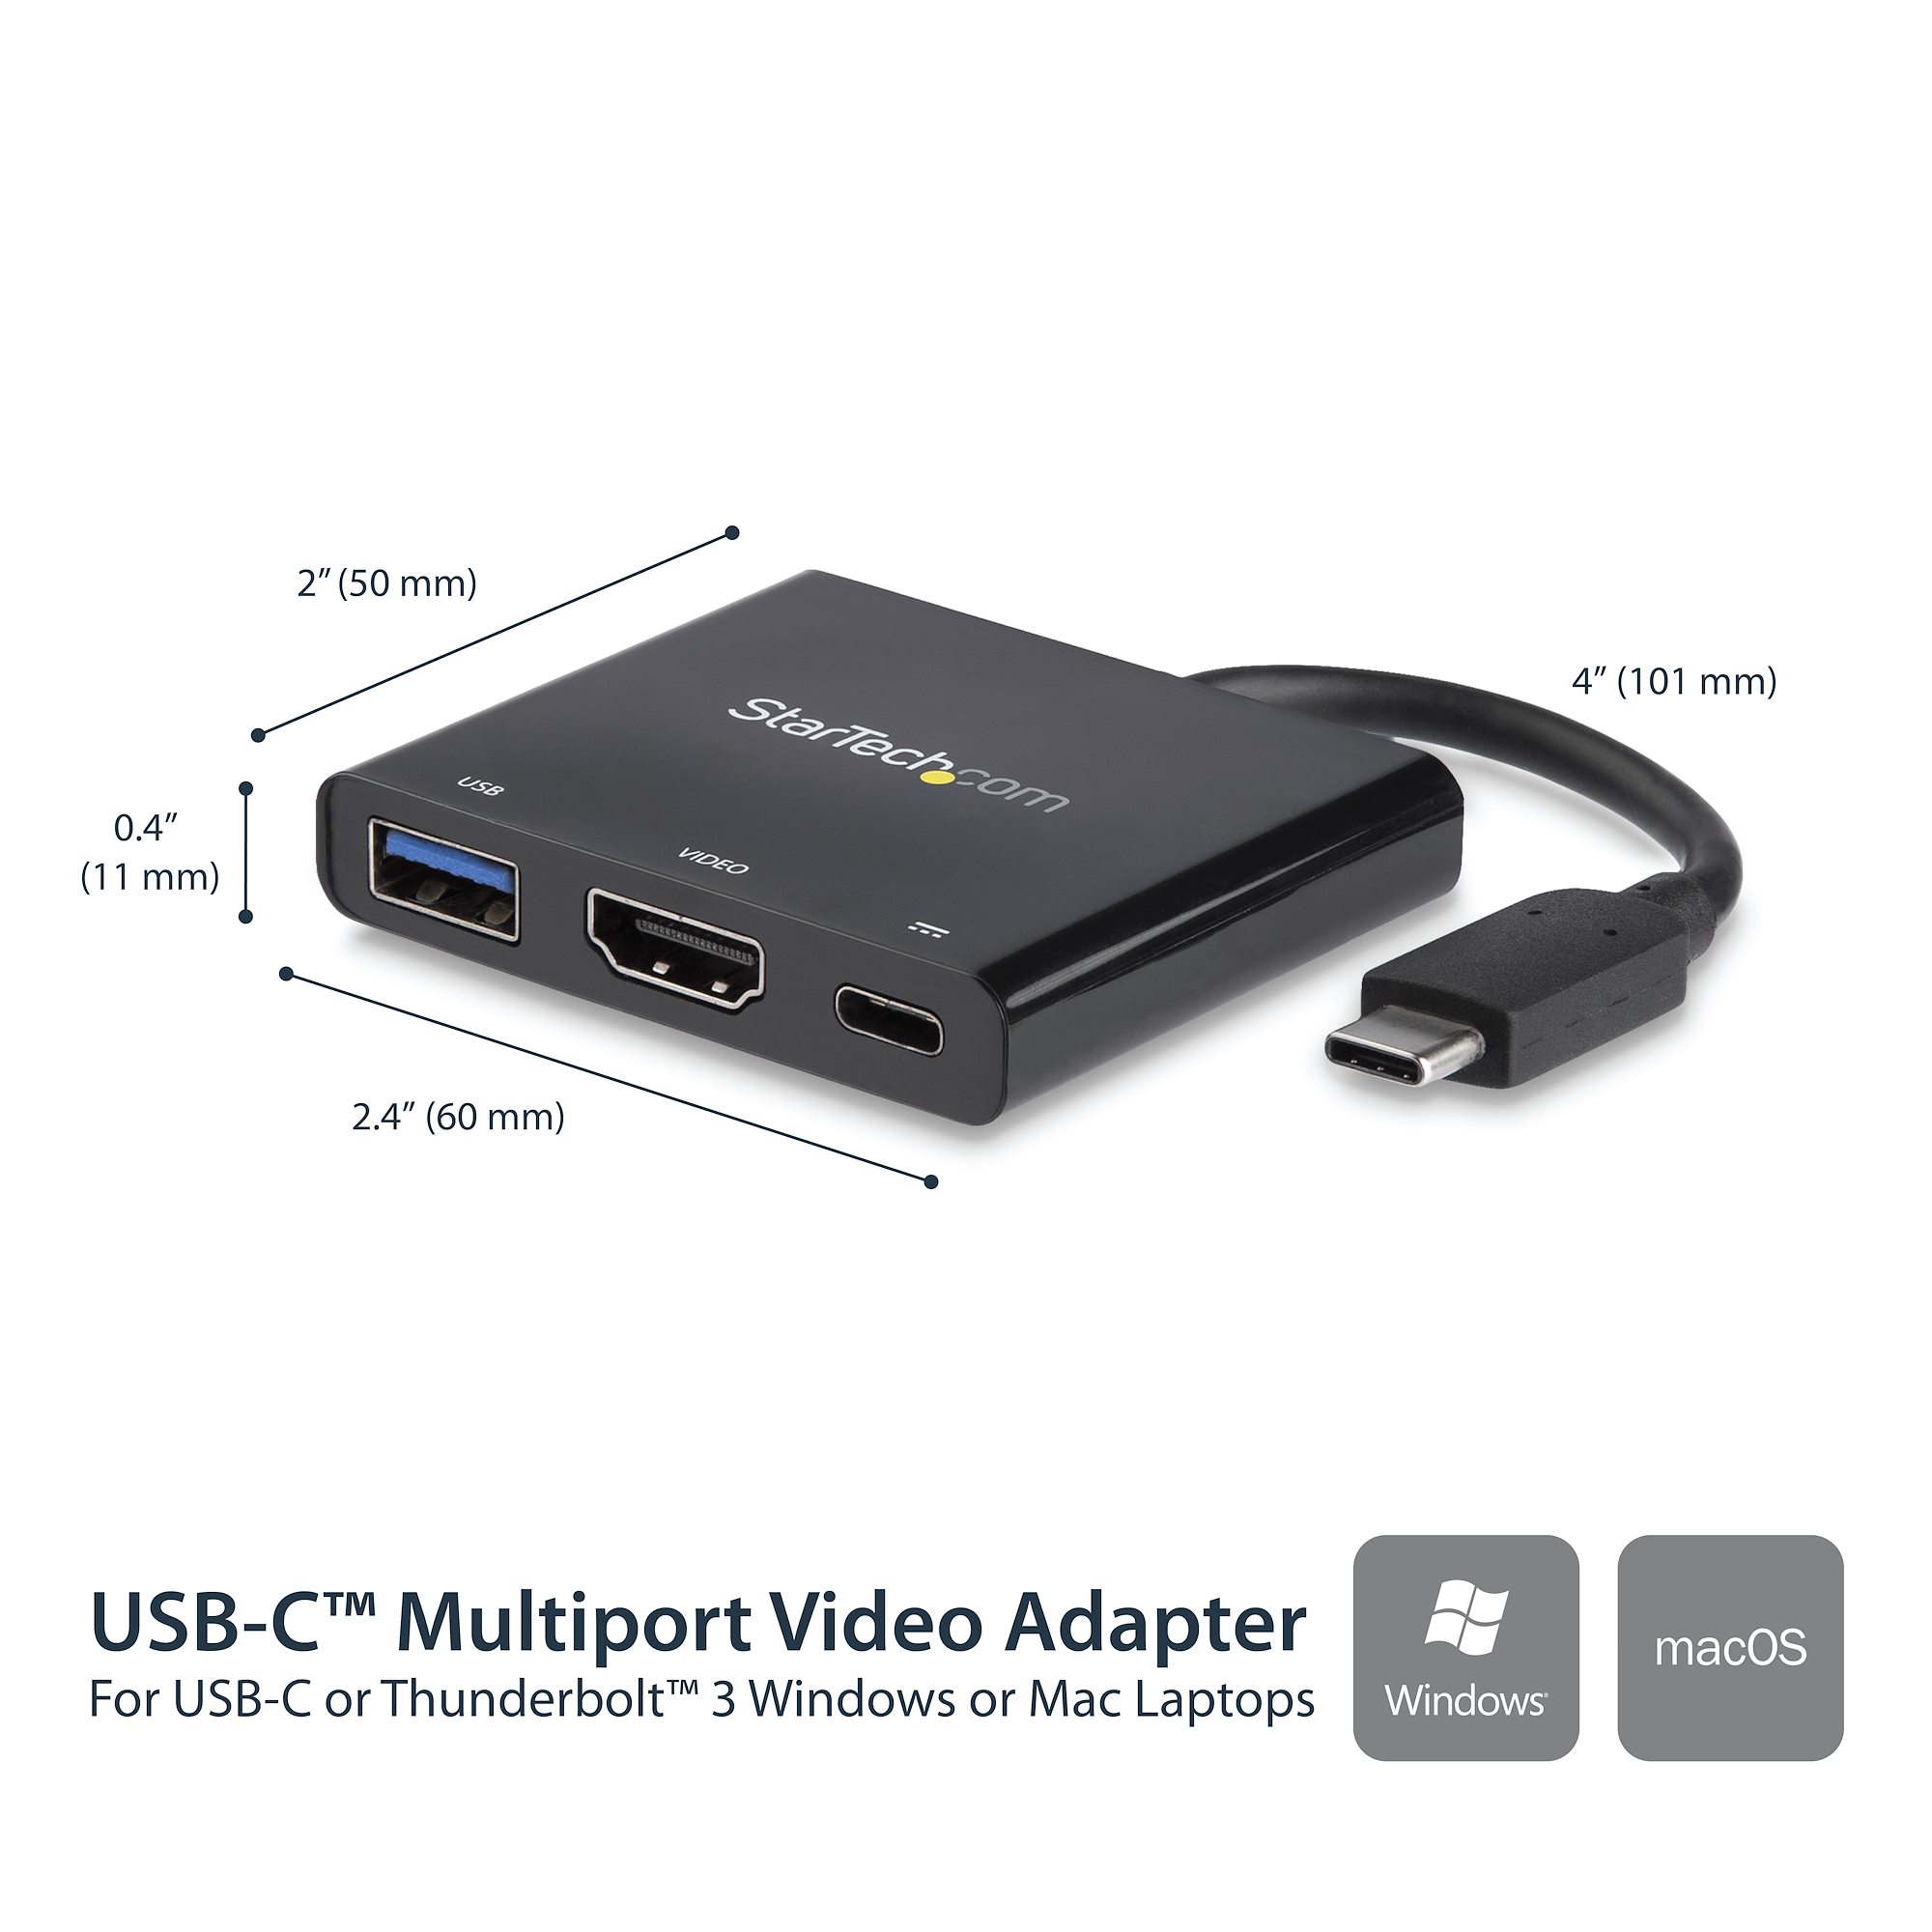 USB Type-C接続マルチアダプター HDMI/USB 3.0ポート/60W USB PD